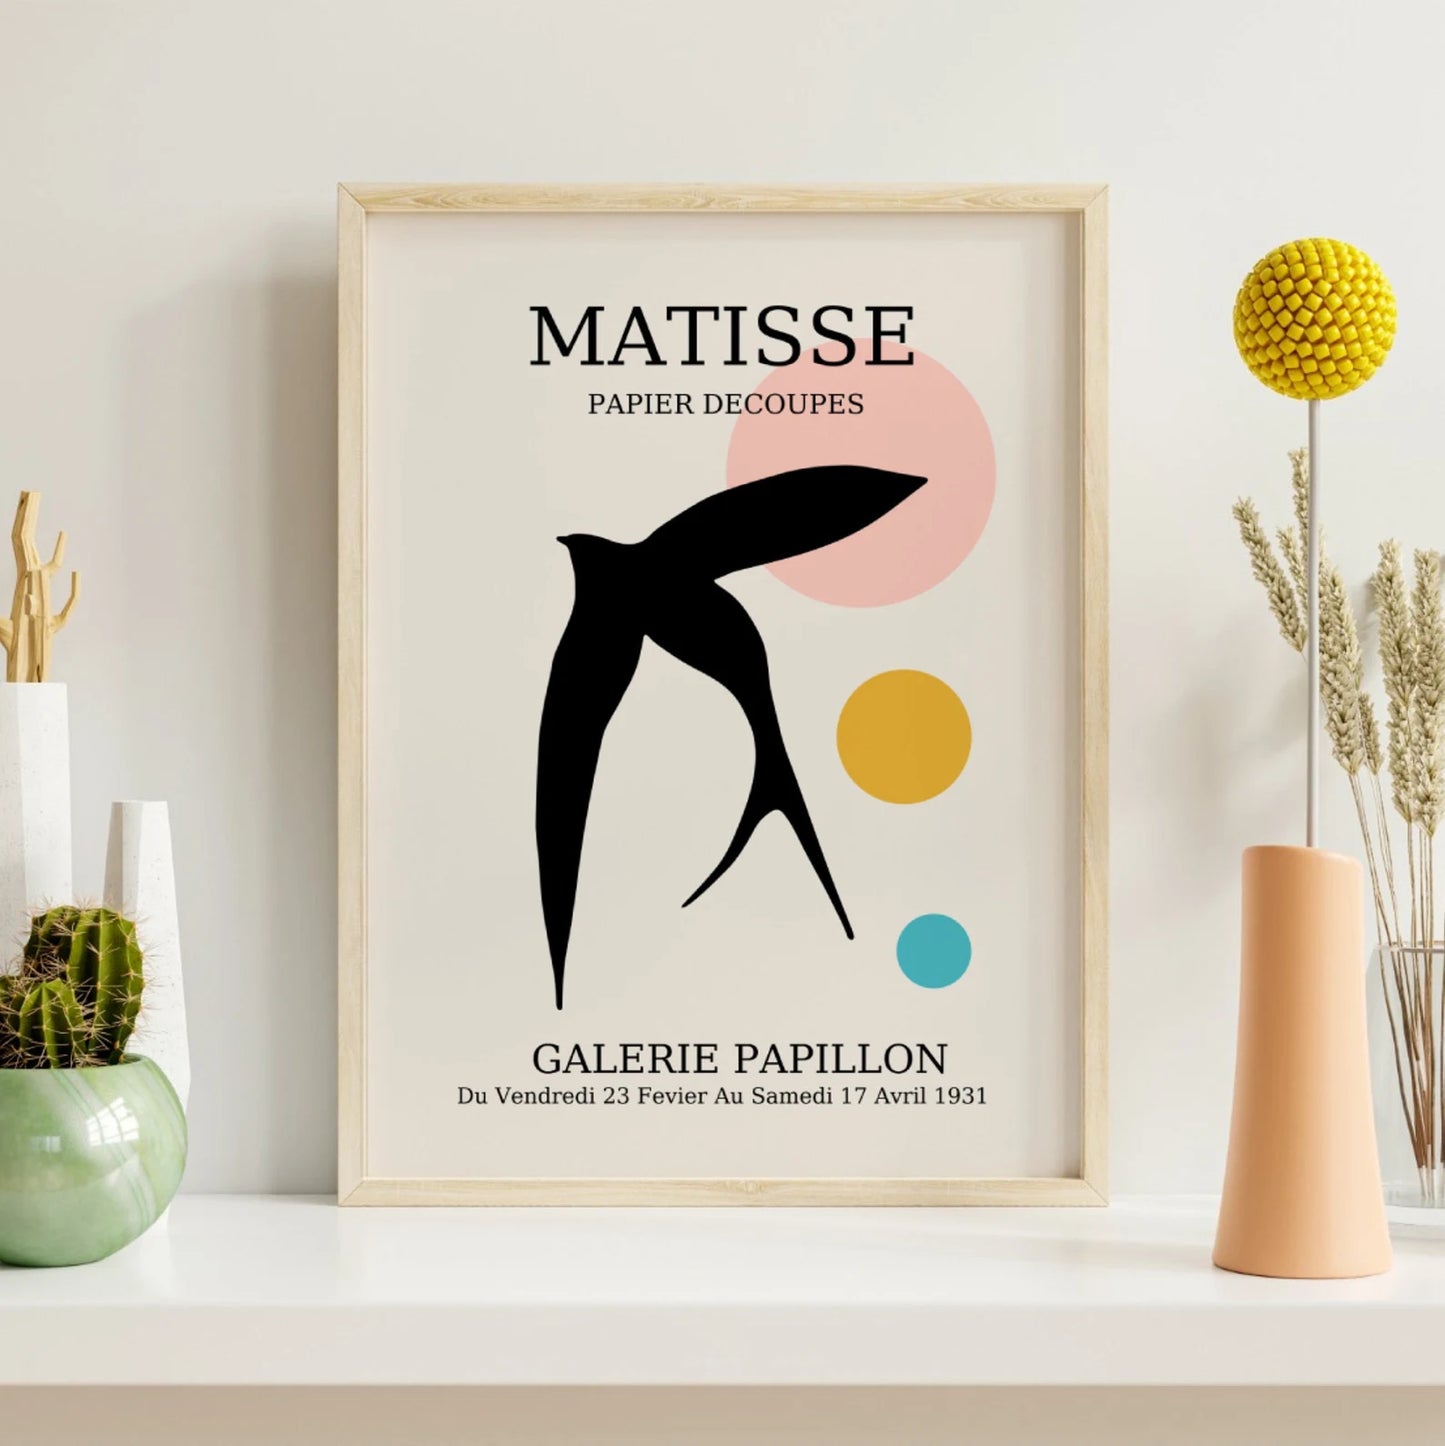 Matisse Print, Matisse Exhibition Poster, Matisse Poster, Matisse Cut Out, Matisse Wall Art, Matisse Exhibition Poster, Modern Minimal Art